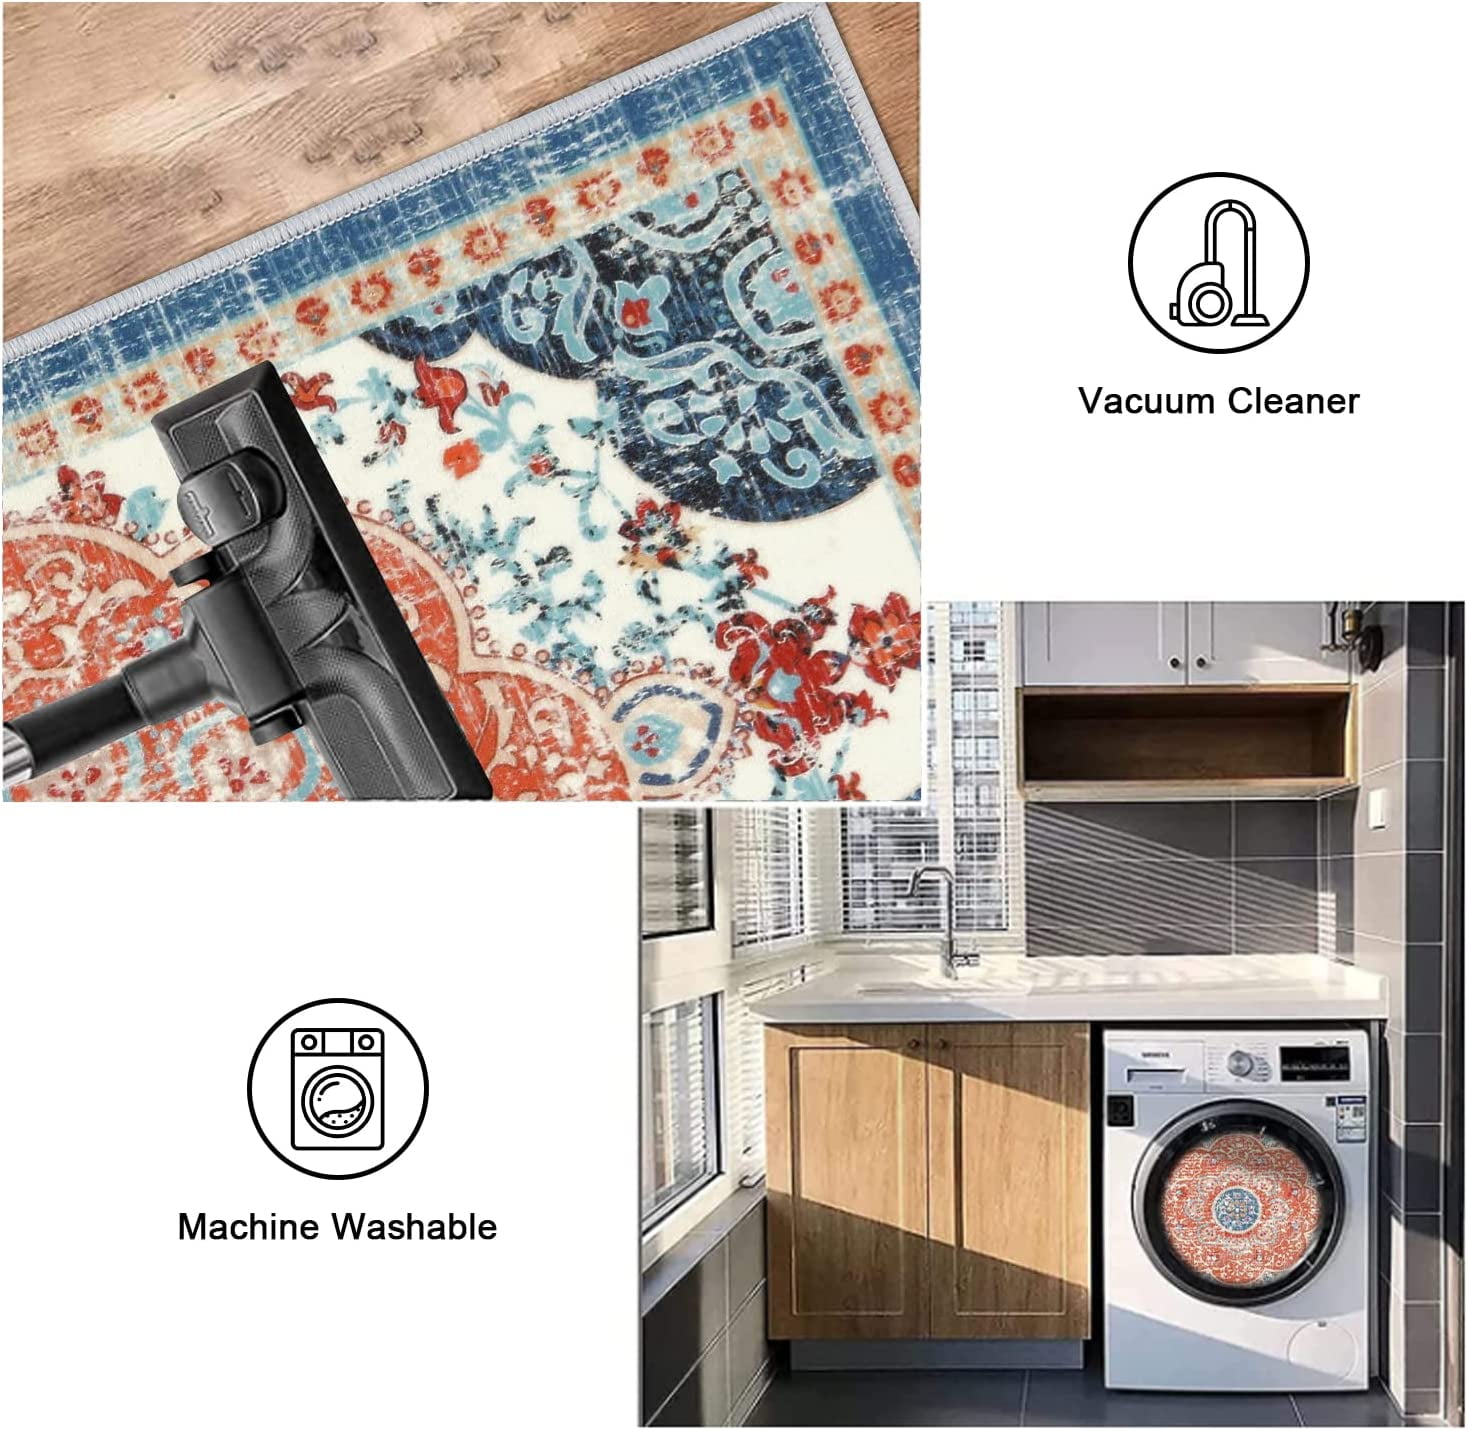 Boho Kitchen Rugs Sets 3 Piece with Runner Non Slip Kitchen Mats for Floor  Washa